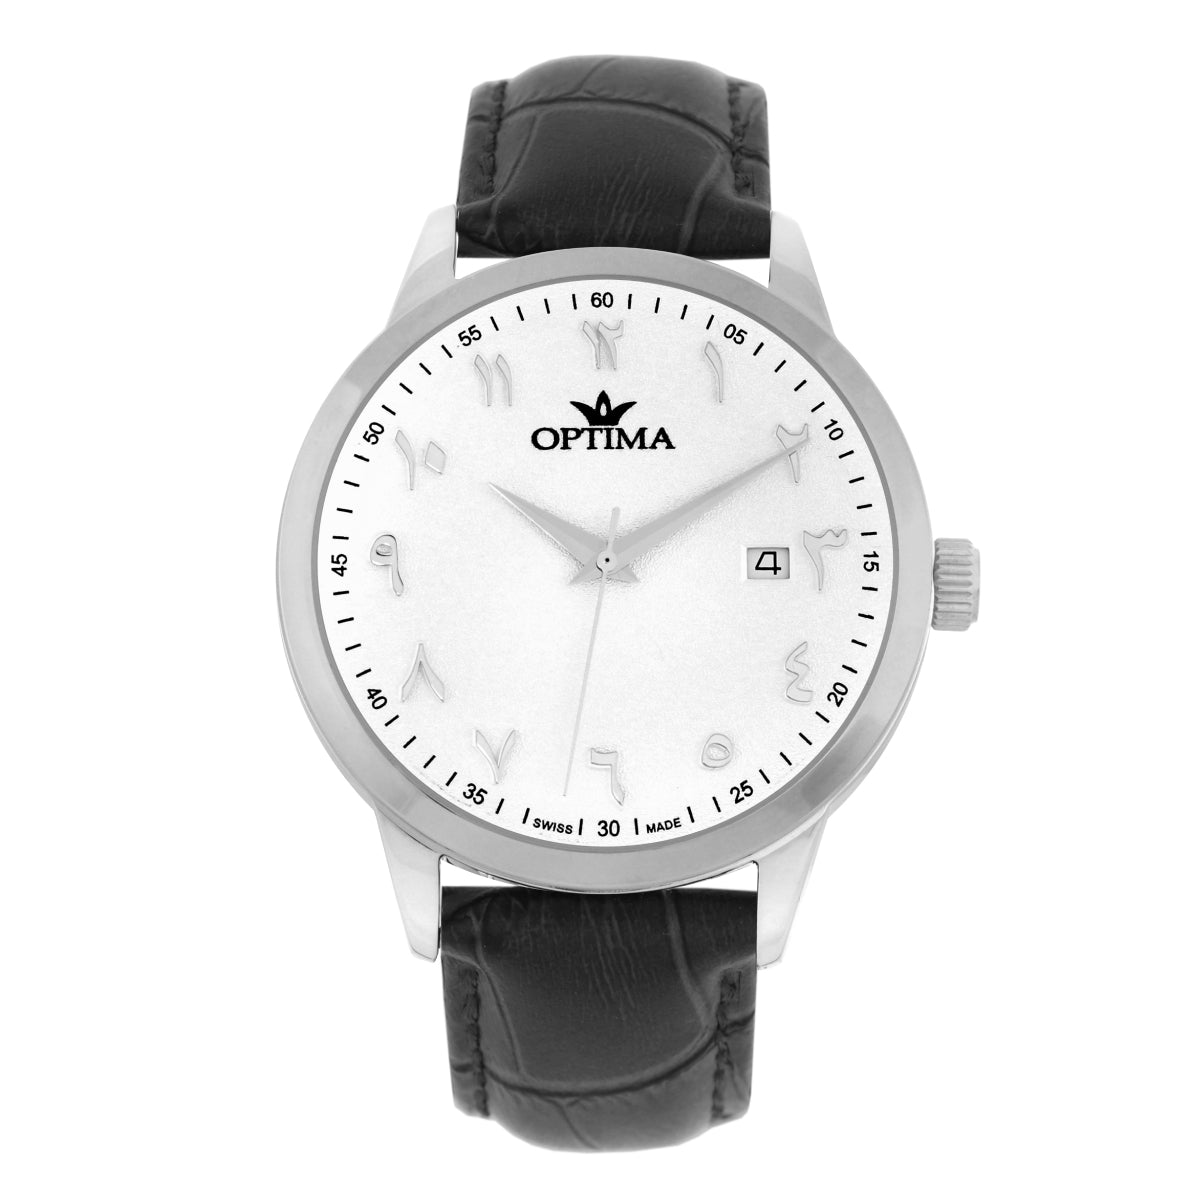 Optima Men's Swiss Quartz Watch with White Dial - OPT-0051